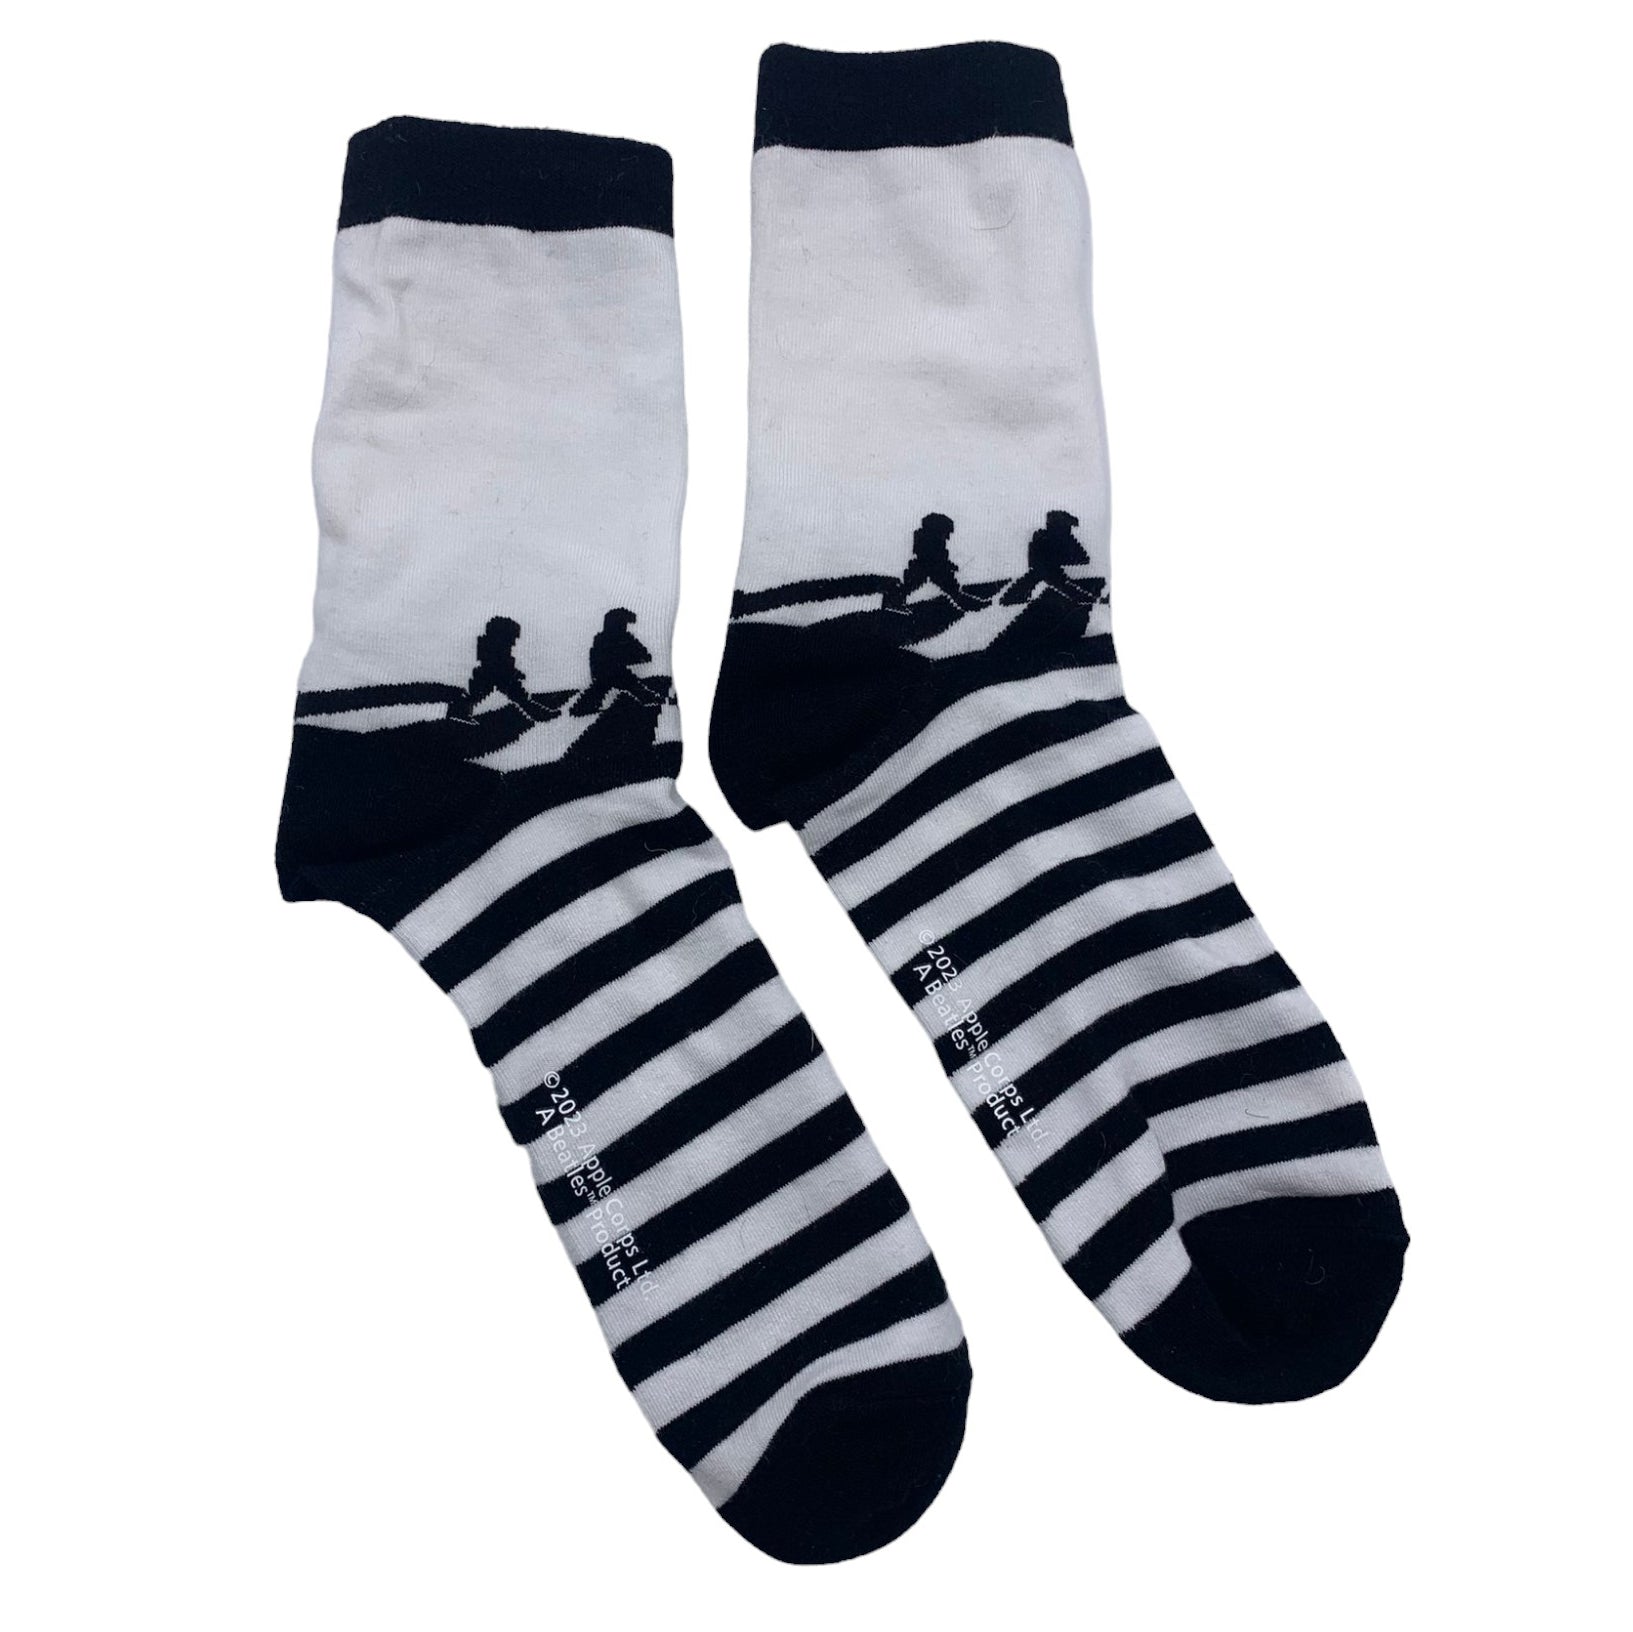 The Beatles Abbey Road Stripy Socks